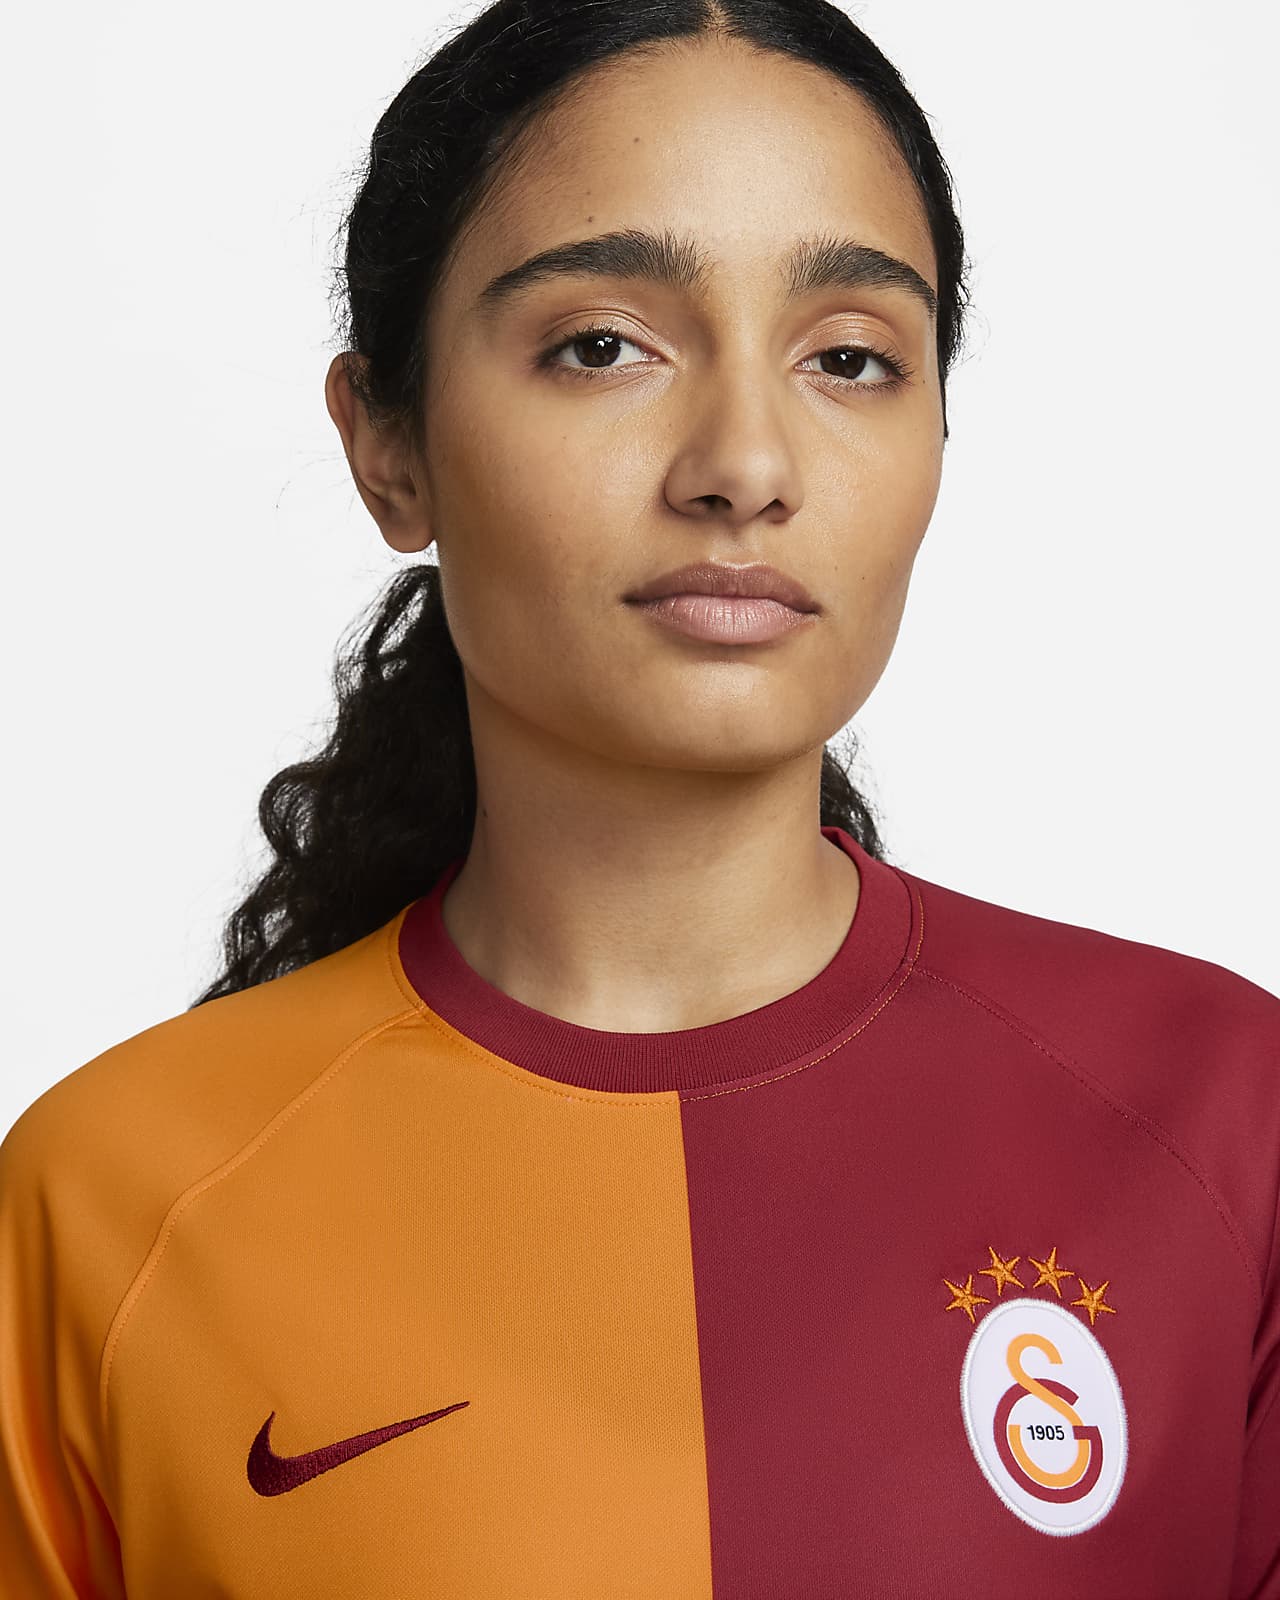 Original Galatasaray 2018/19 Home Football Nike Jersey Size Men